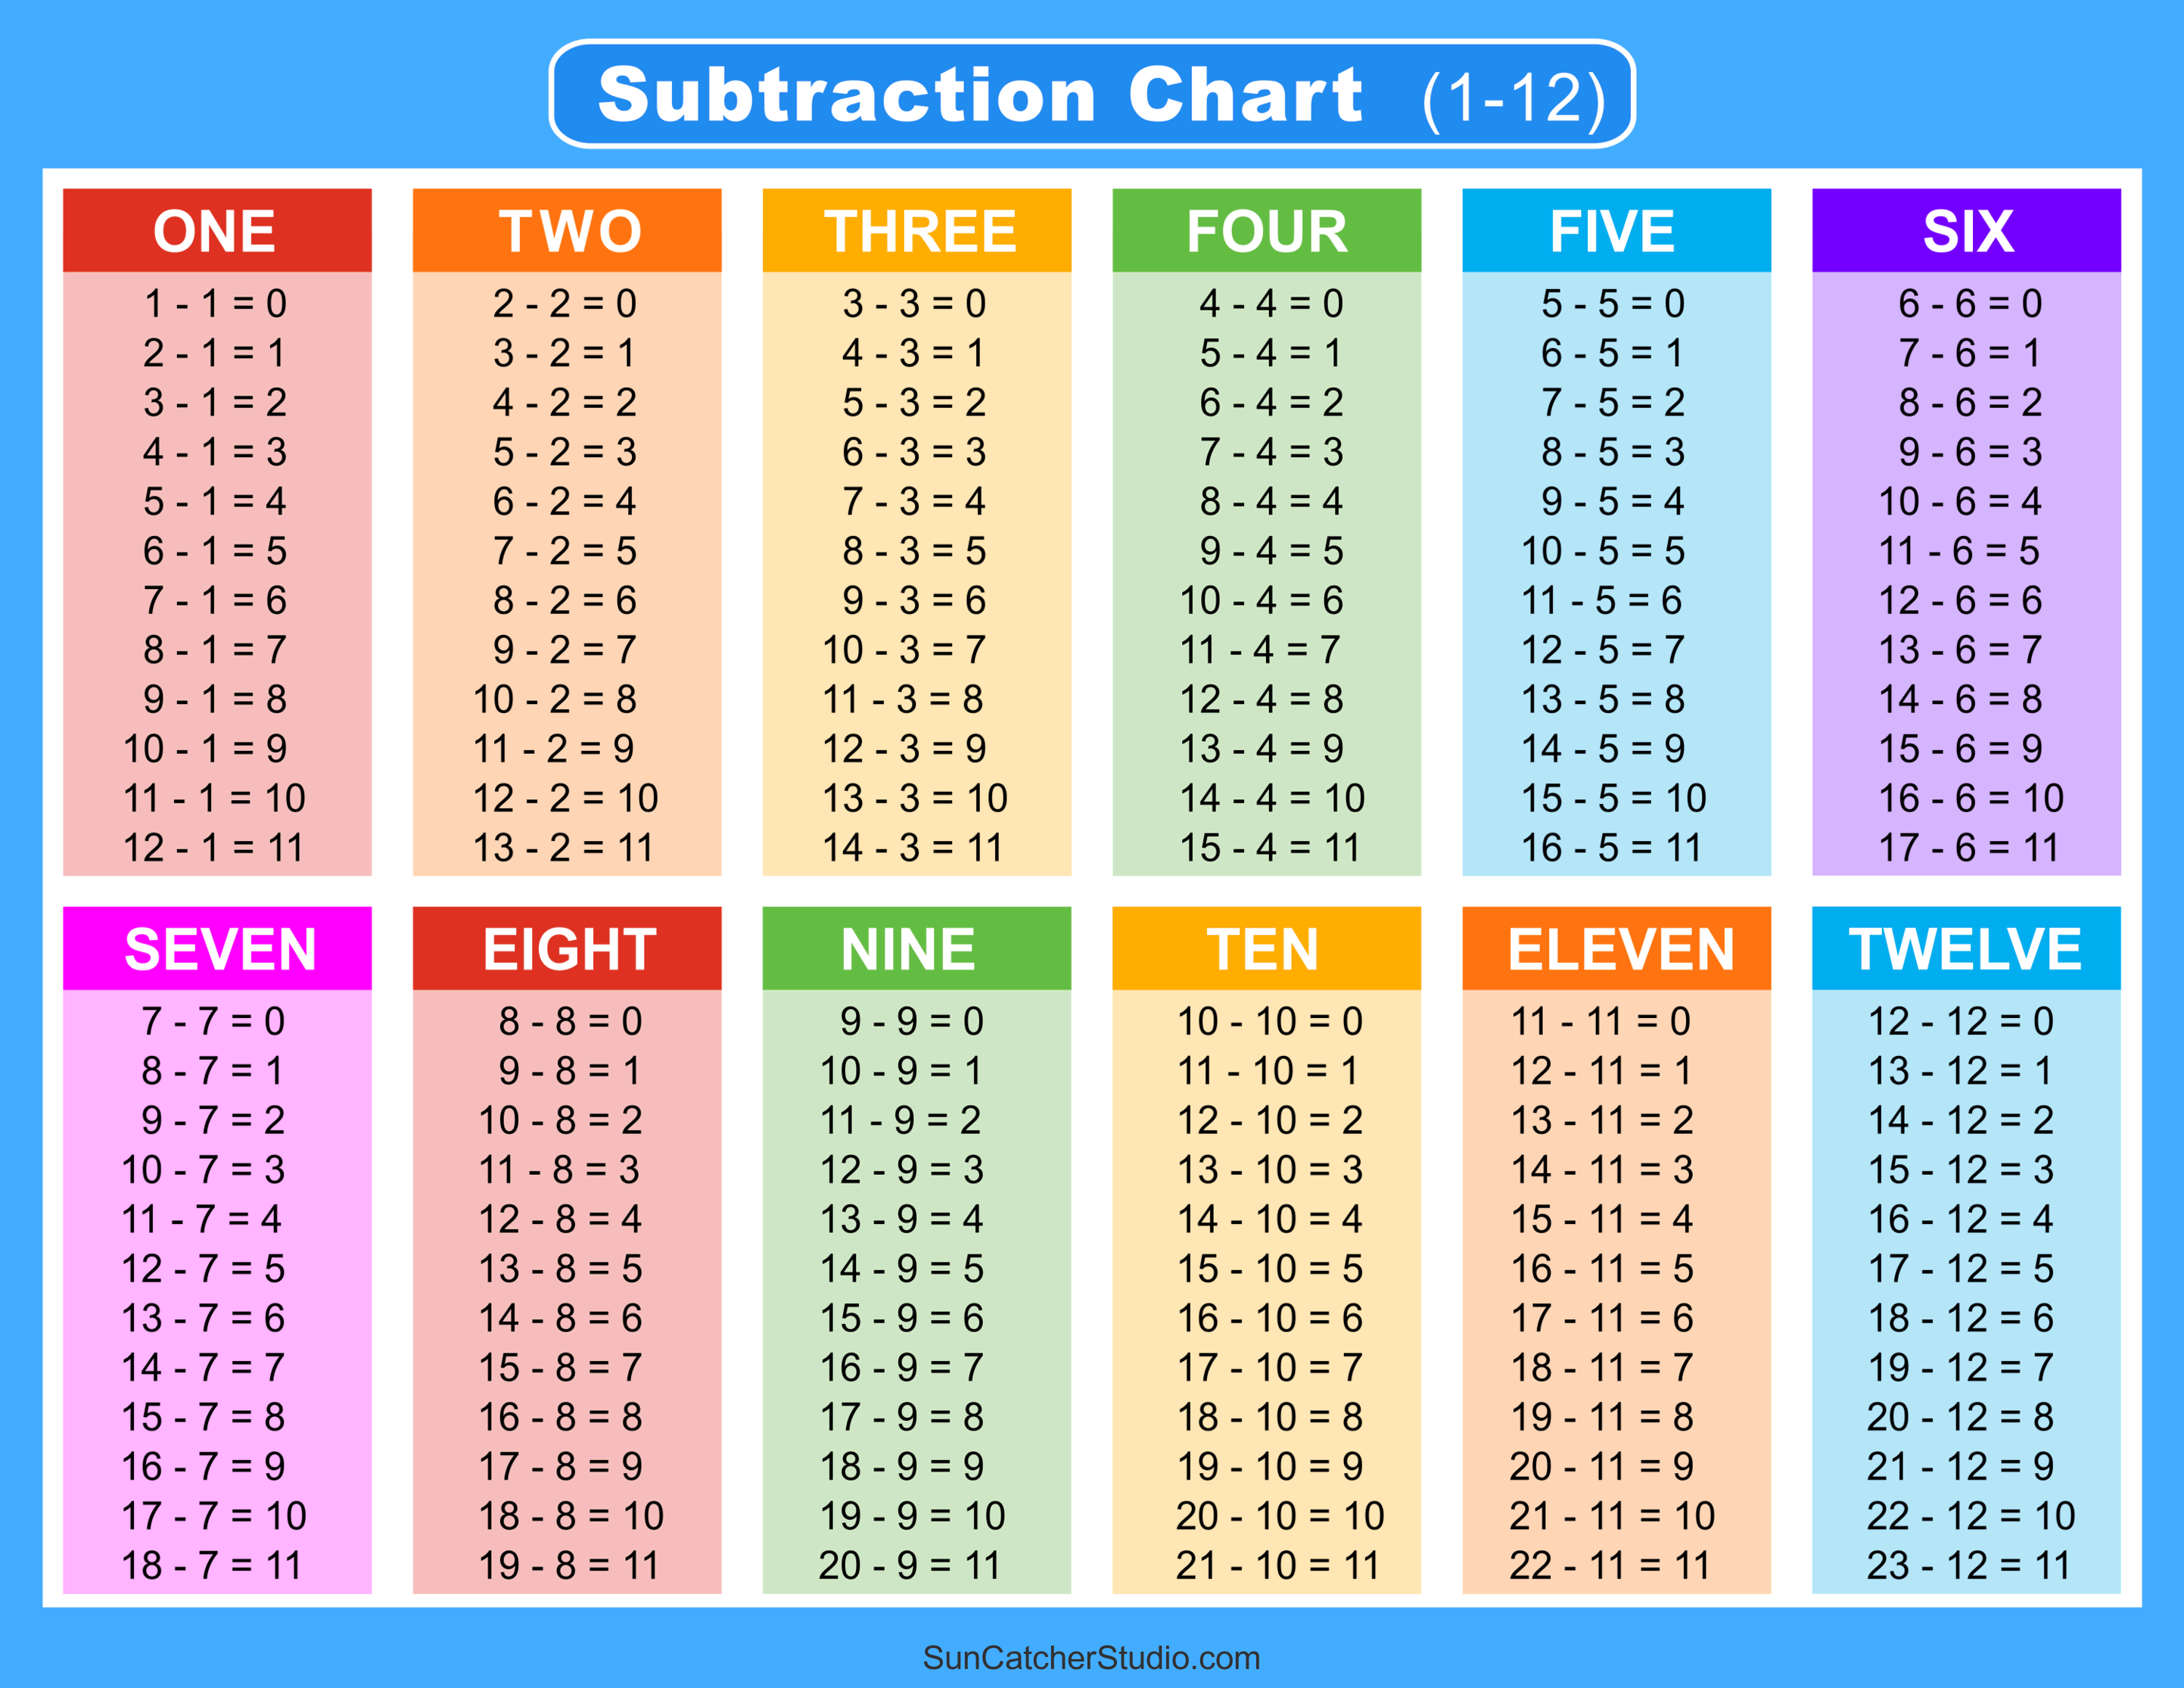 Subtraction Tables, Worksheets, & Charts Math Drills (PDF) DIY